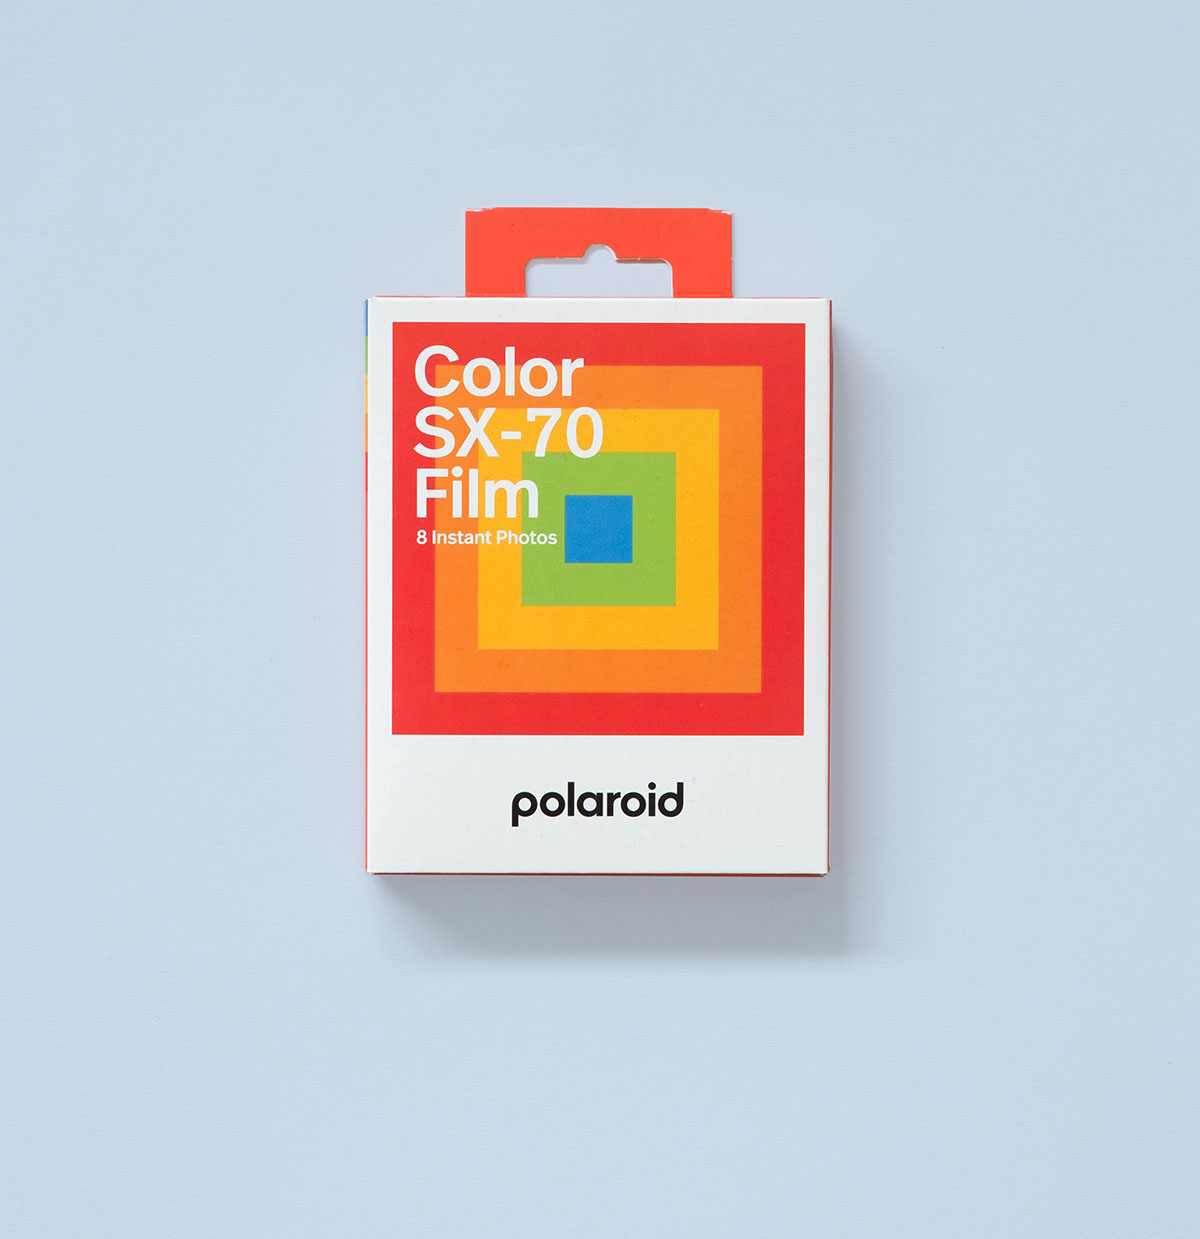 Polaroid Originals 4671 Black & White Film for 600 Cameras by Polaroid  Originals